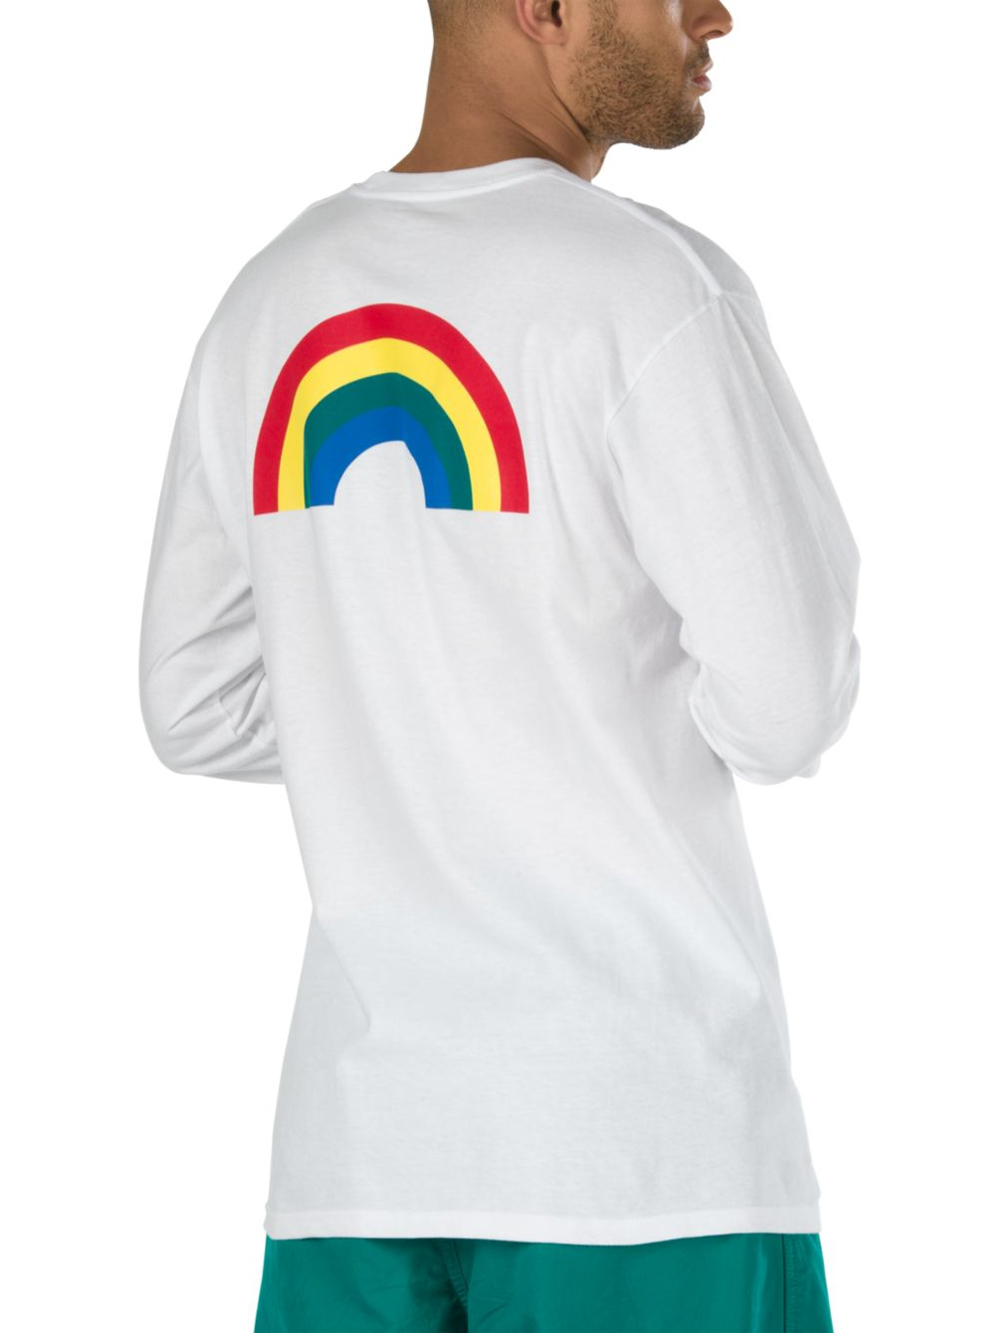 vans rainbow long sleeve shirt